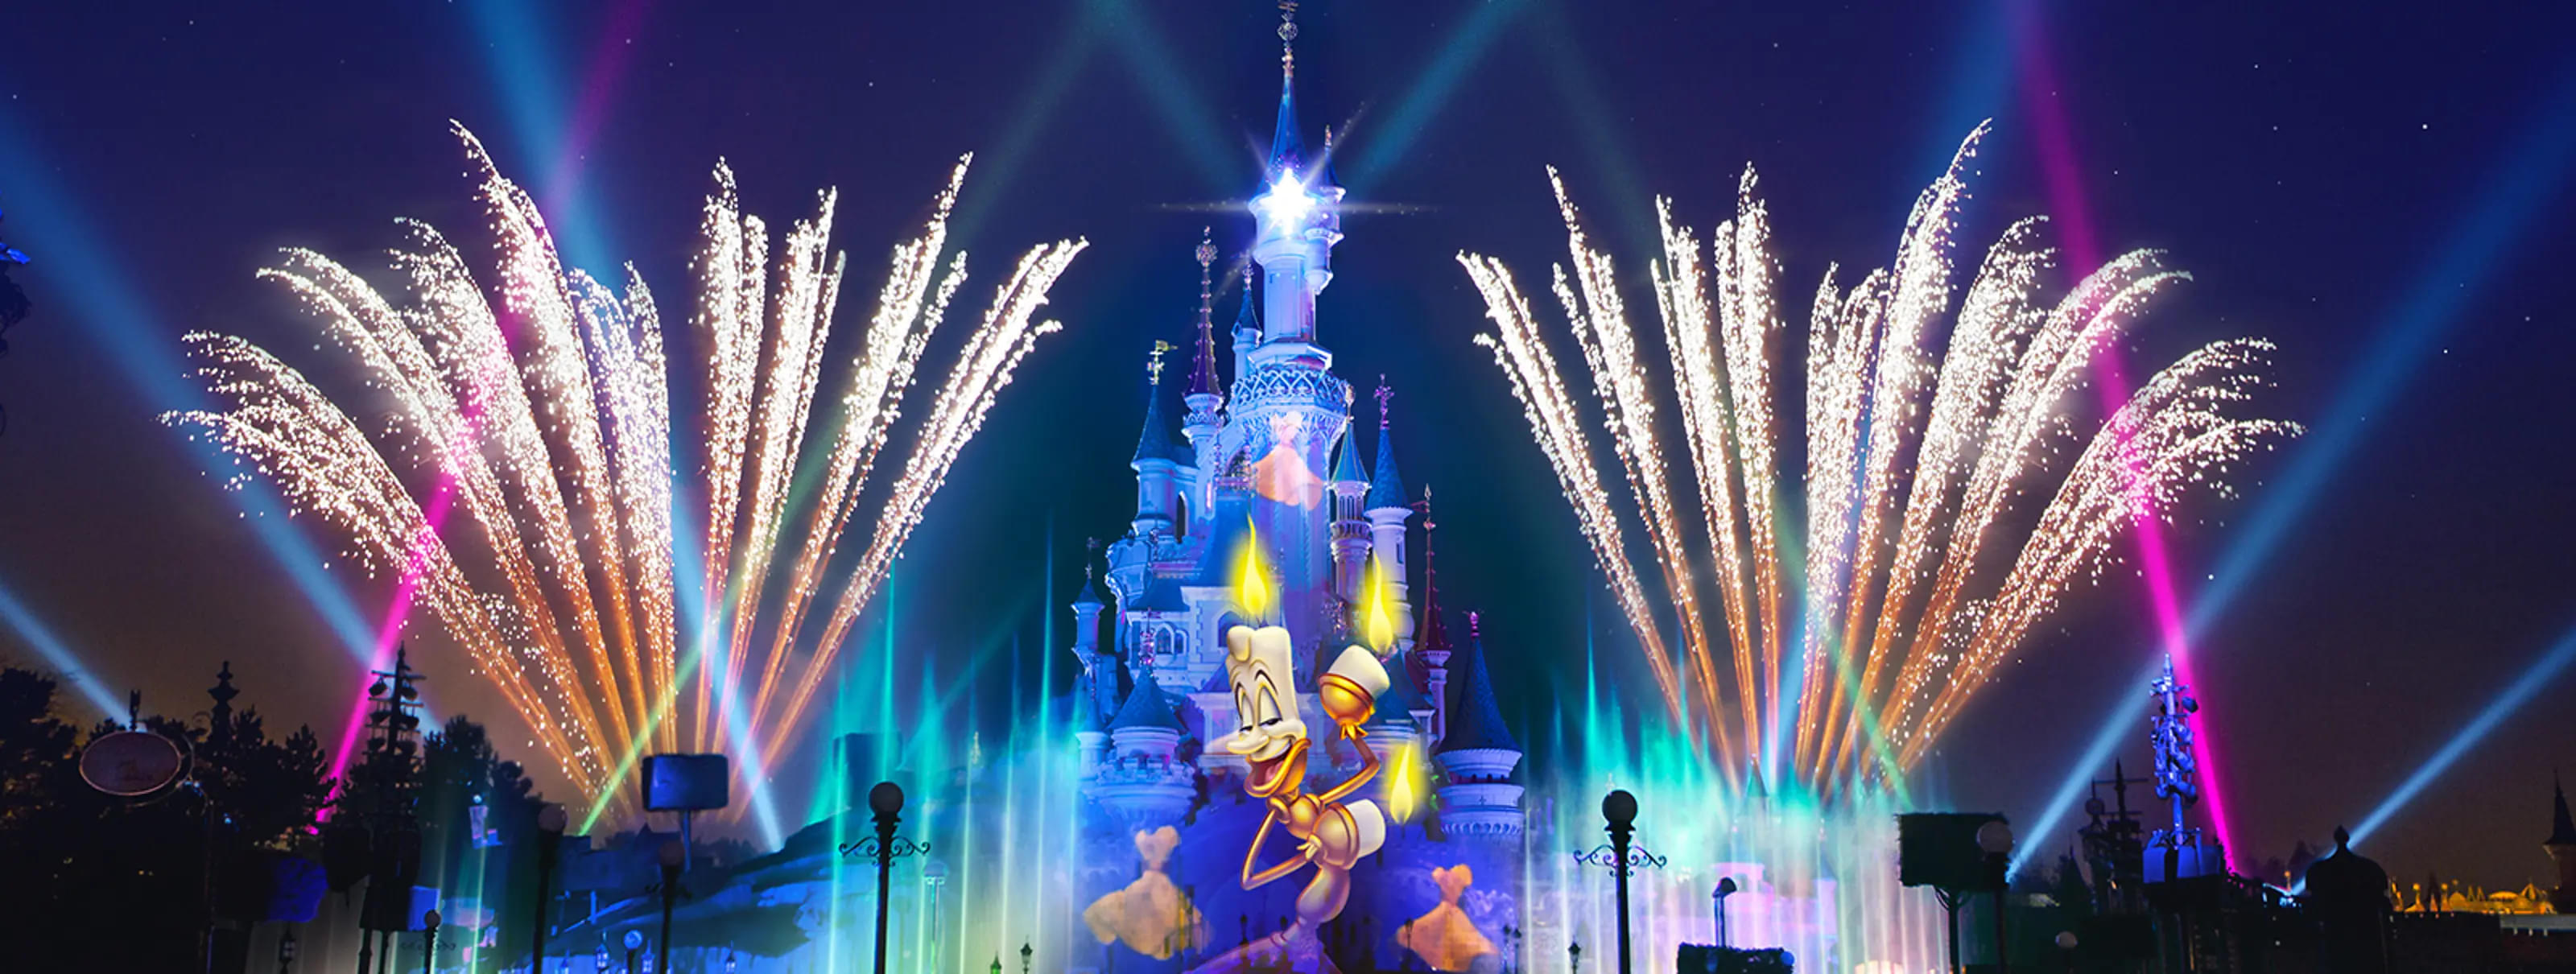 Disneyland Paris Fireworks 